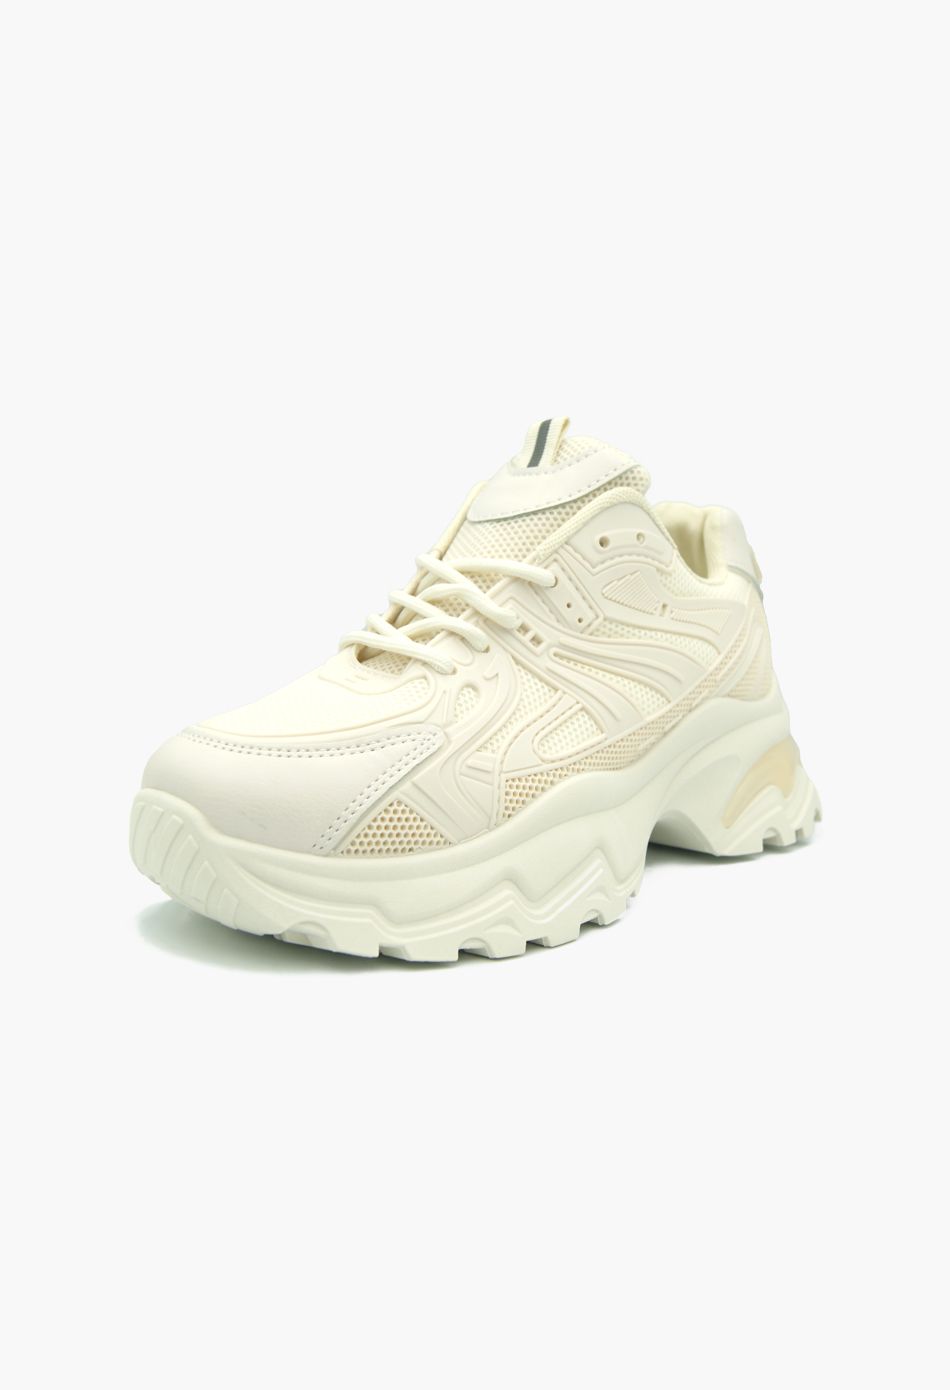 Chunky Sneakers Μονόχρωμα με Τρακτερωτή Σόλα Μπεζ / WX-105-beige Γυναικεία Αθλητικά και Sneakers joya.gr